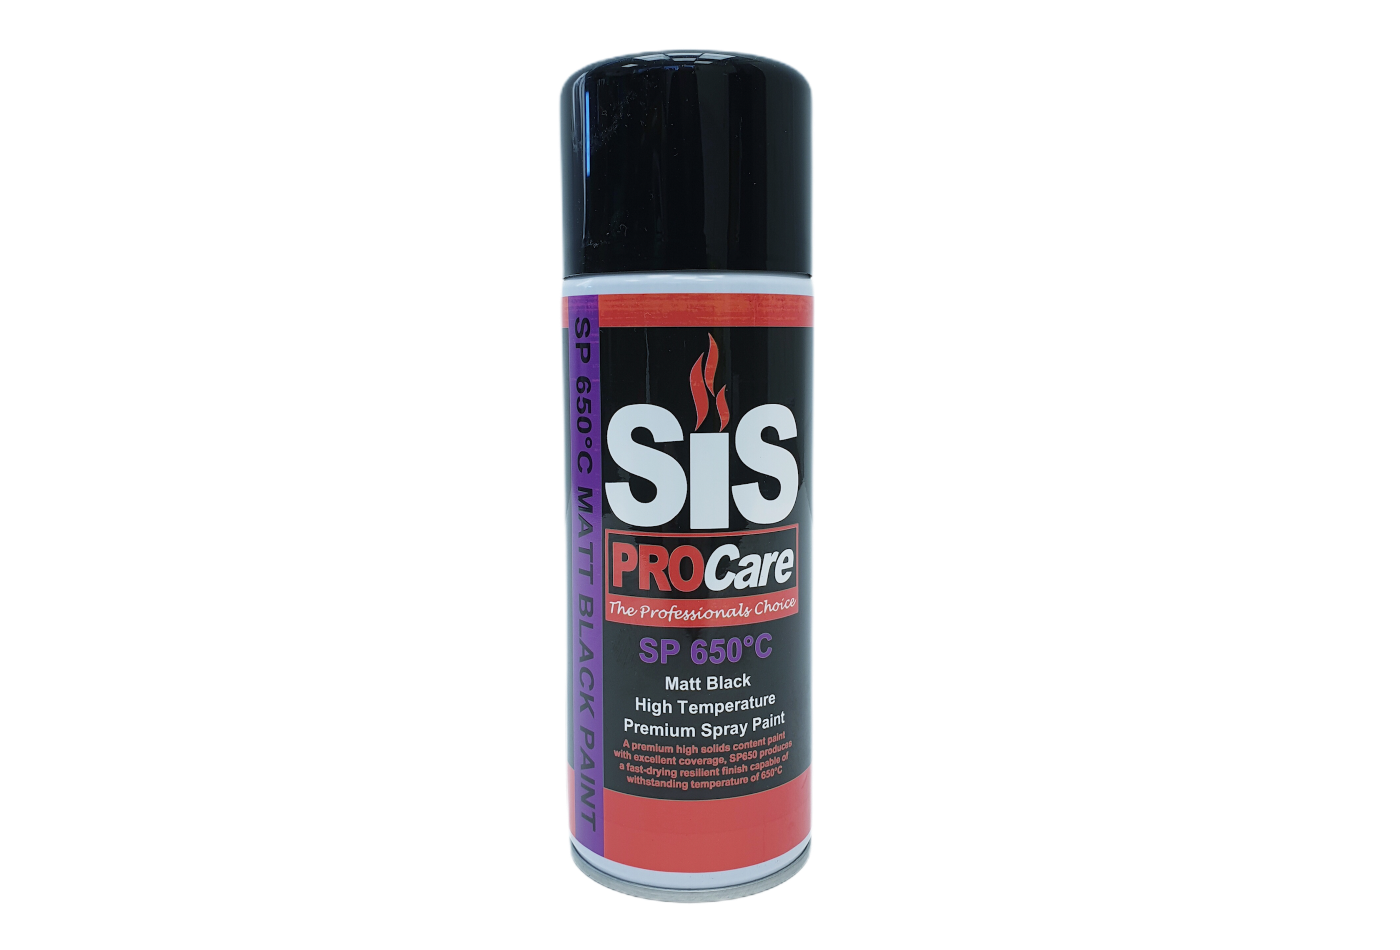 SiS Procare SP650 MAtt Black High Temperature Stove Paint.